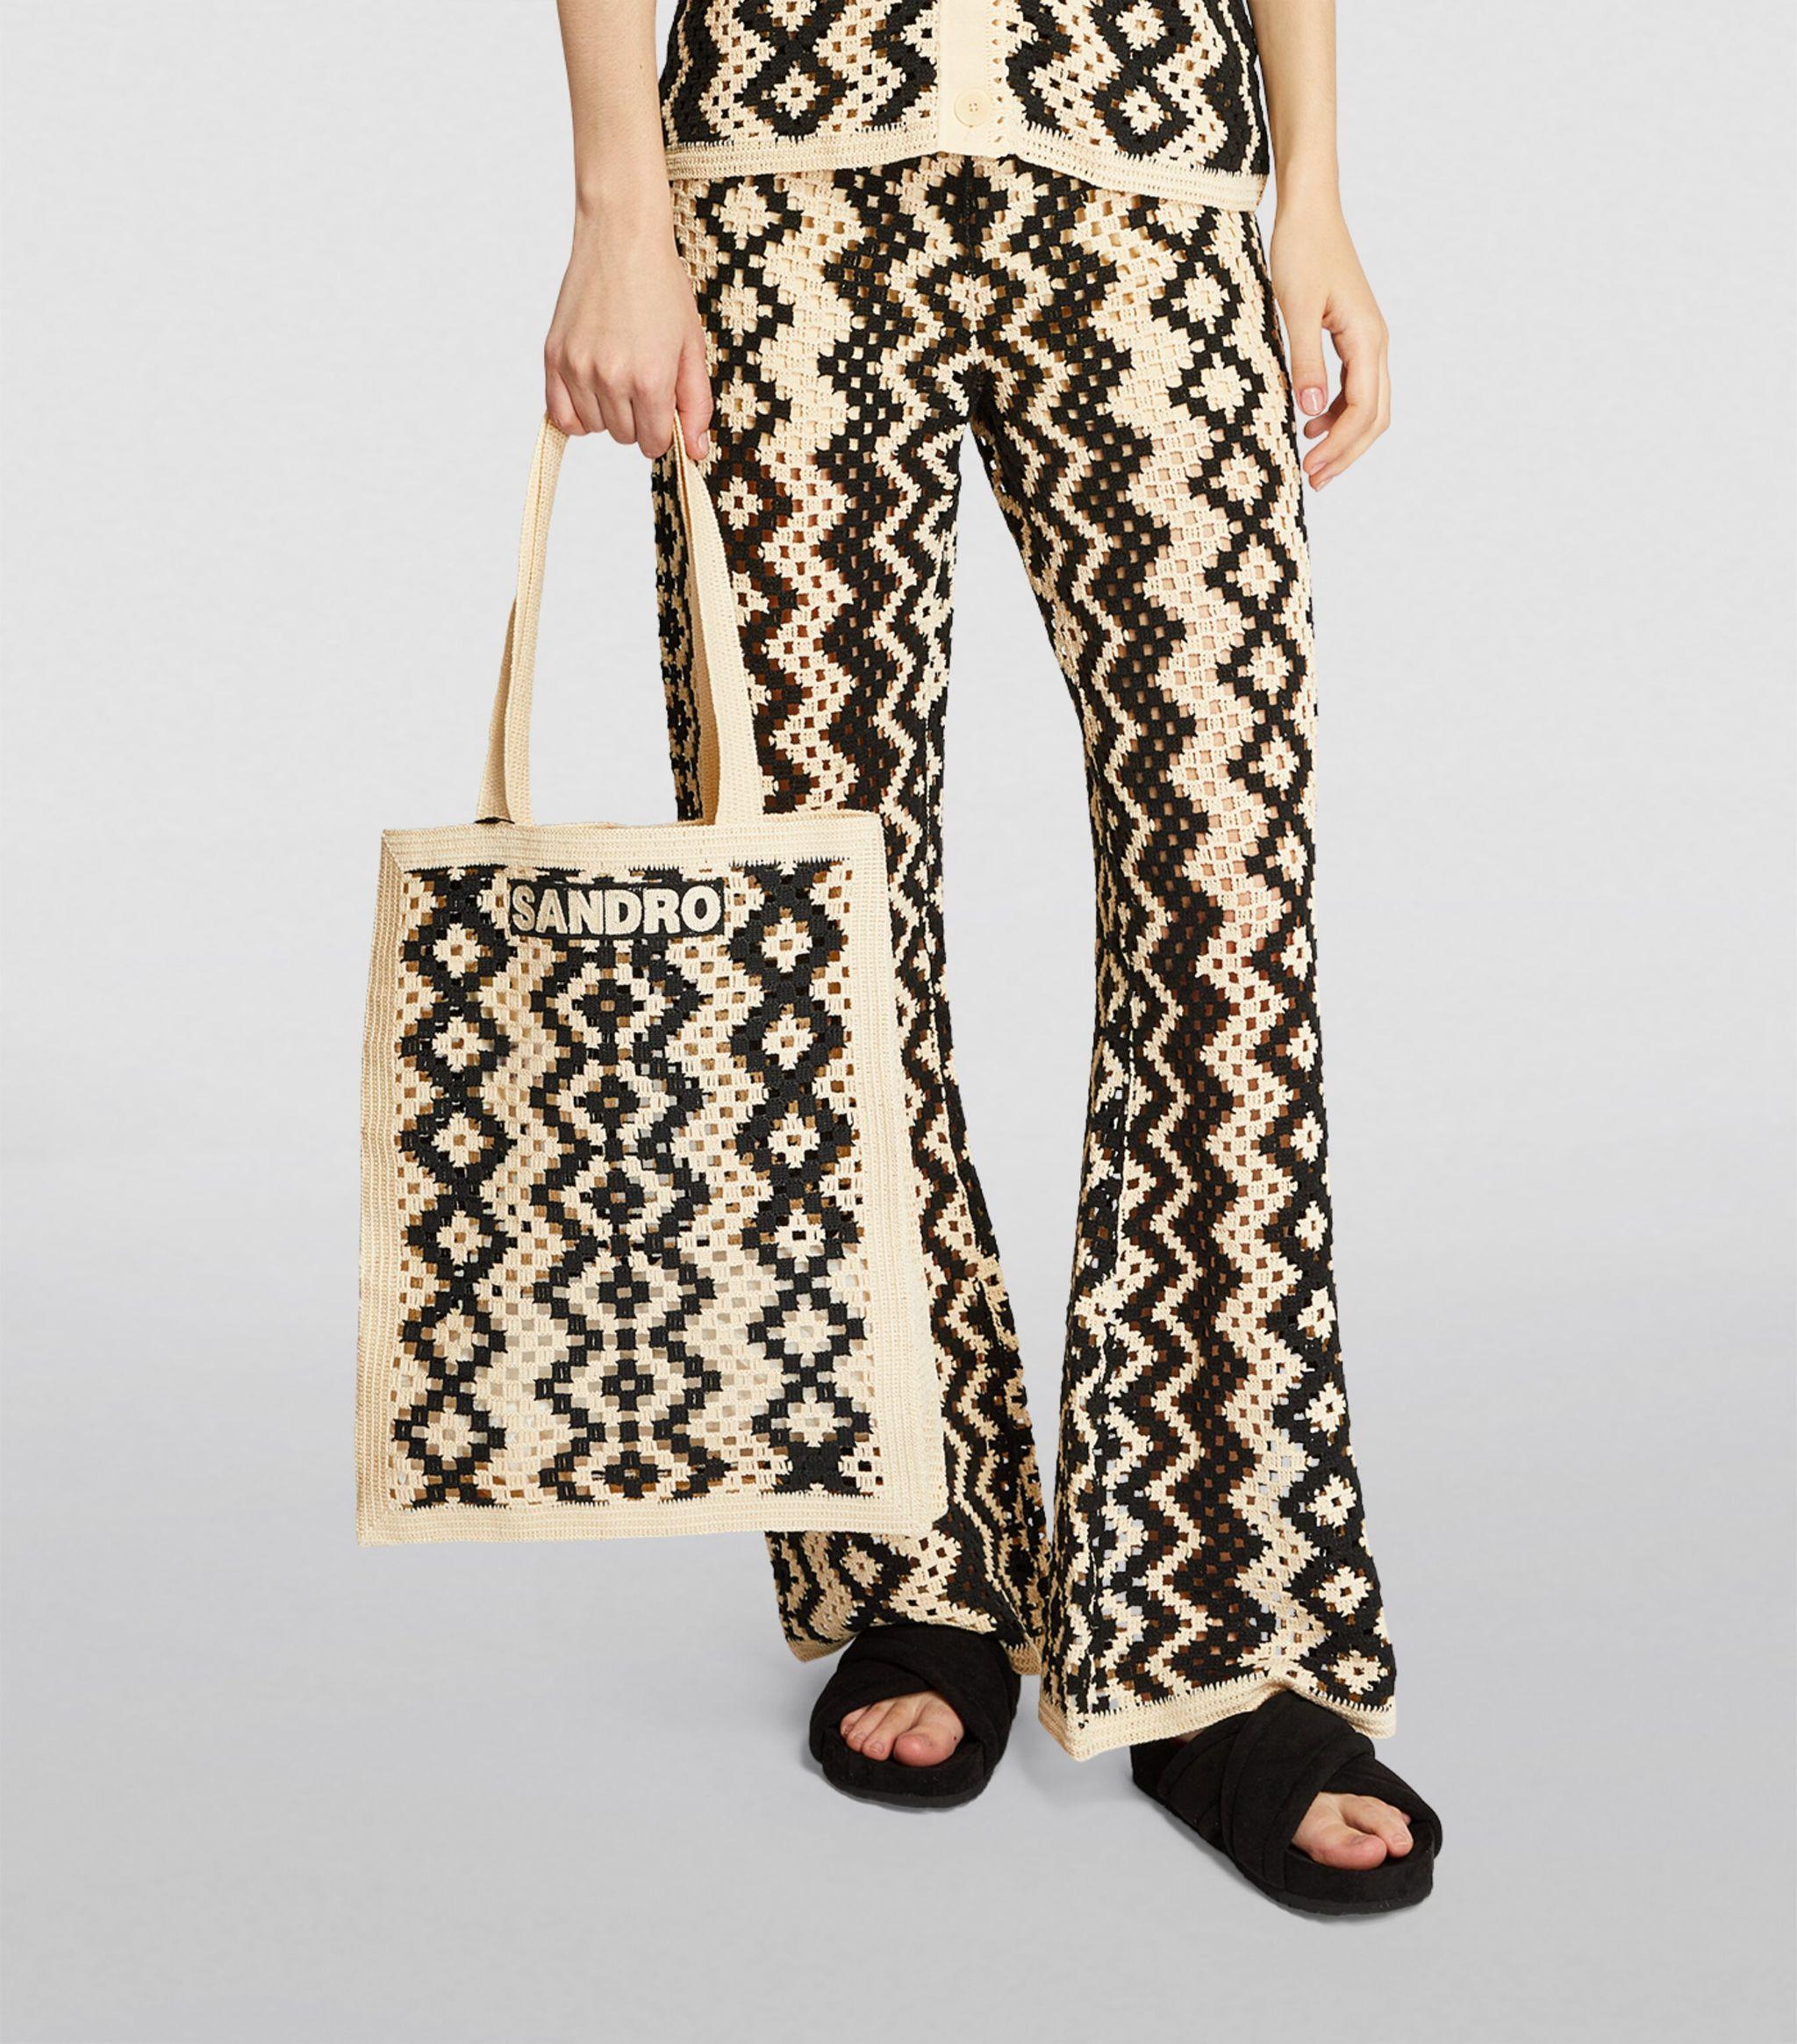 Knitted Leopard Print Tote Bag Animal Print Crochet Bag 